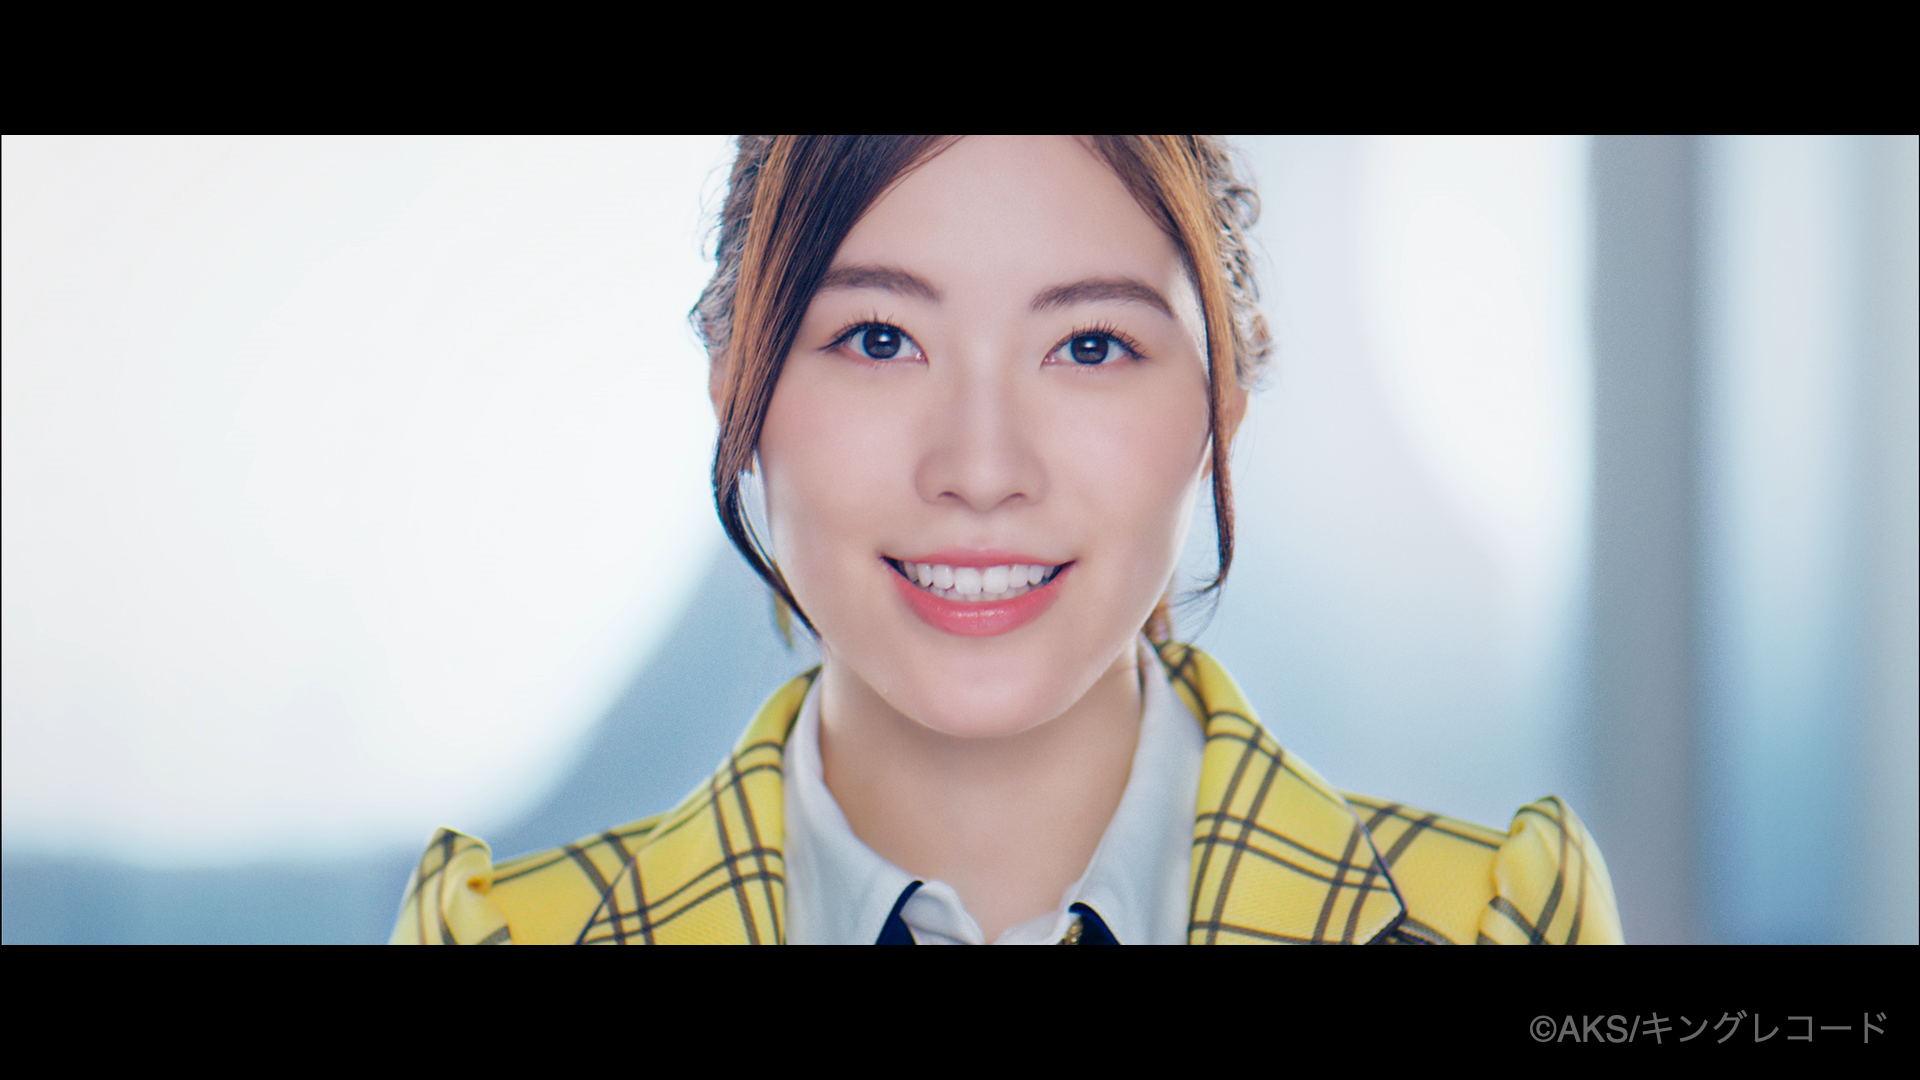 Welcome Back Jurina! AKB48 Completed the Full Version MV for “Sentimental Train”